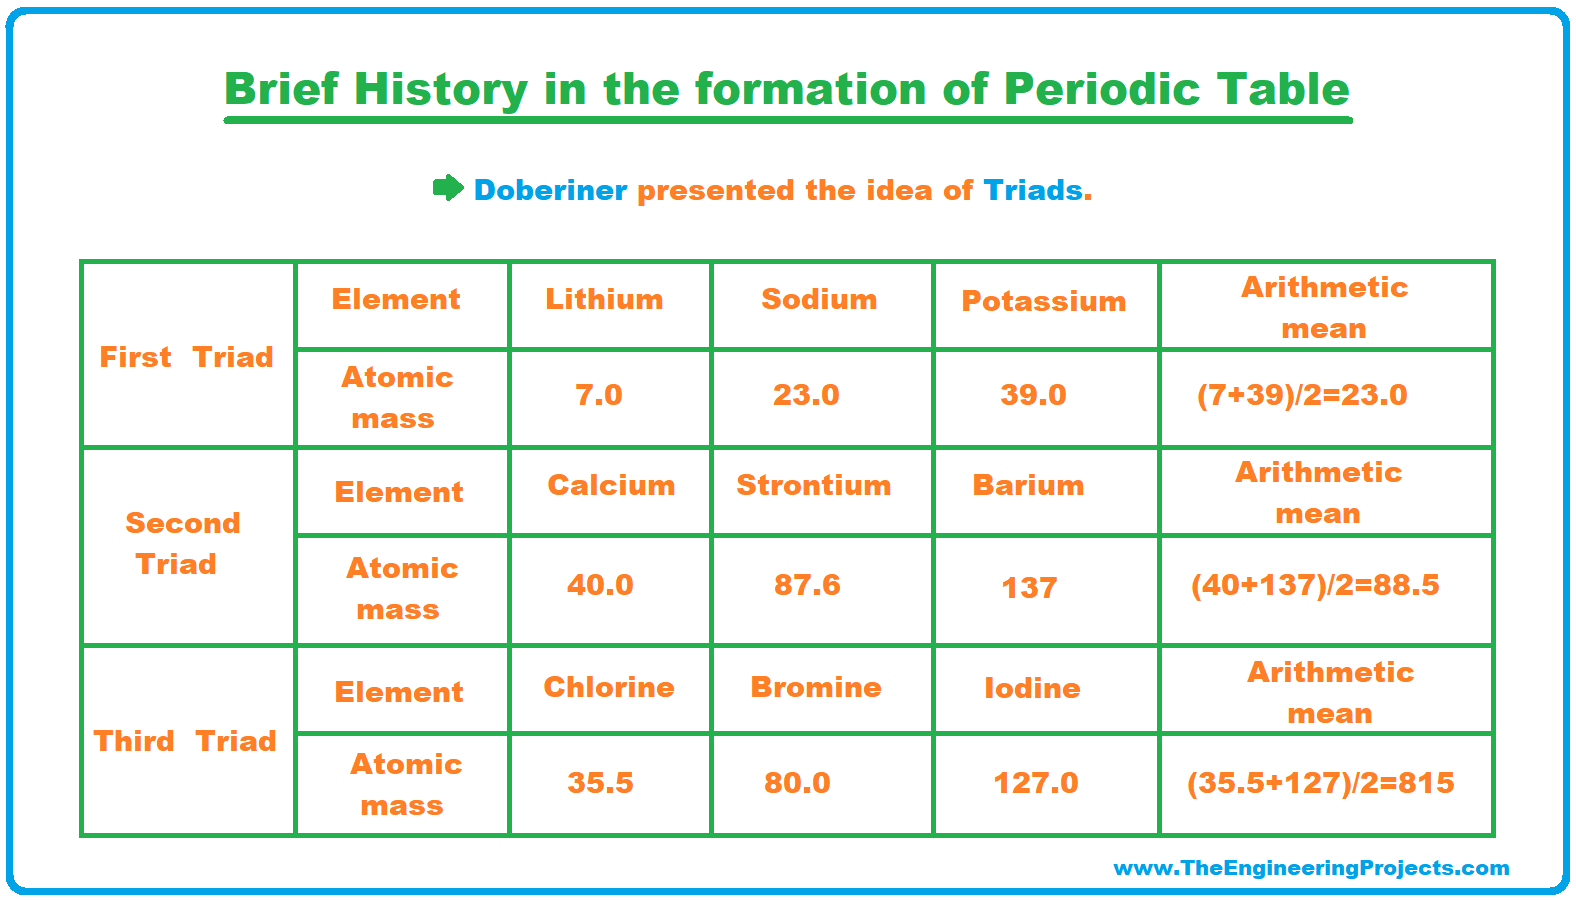 History of Periodic Table, Periodic Table, idea of triads, periodic table deifnition, periodic table history